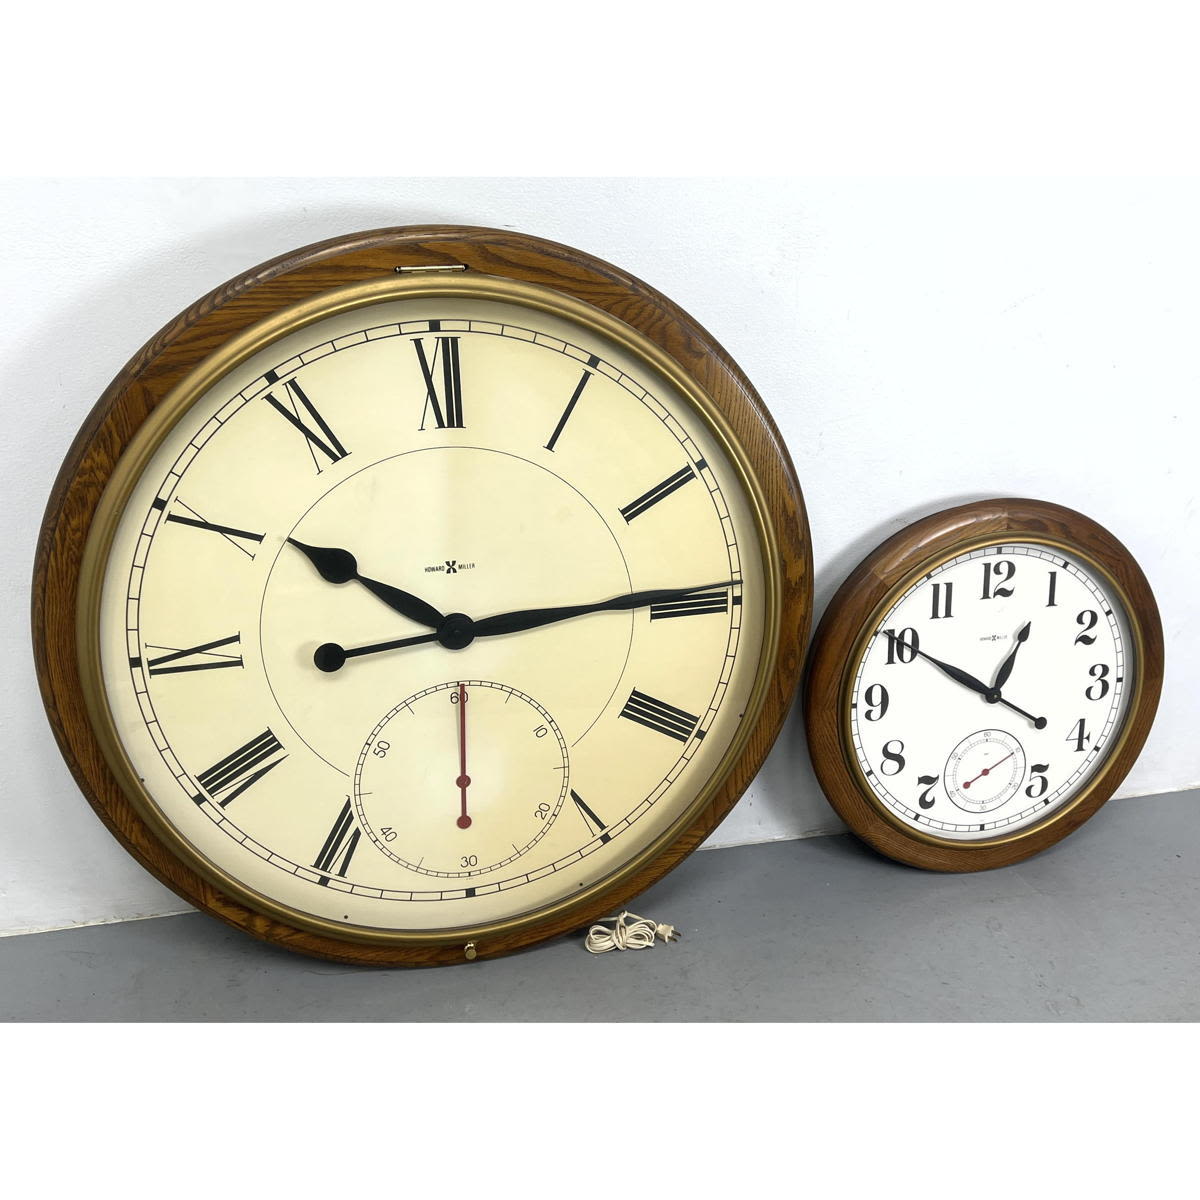 2pcs Howard Miller Wall Clocks.